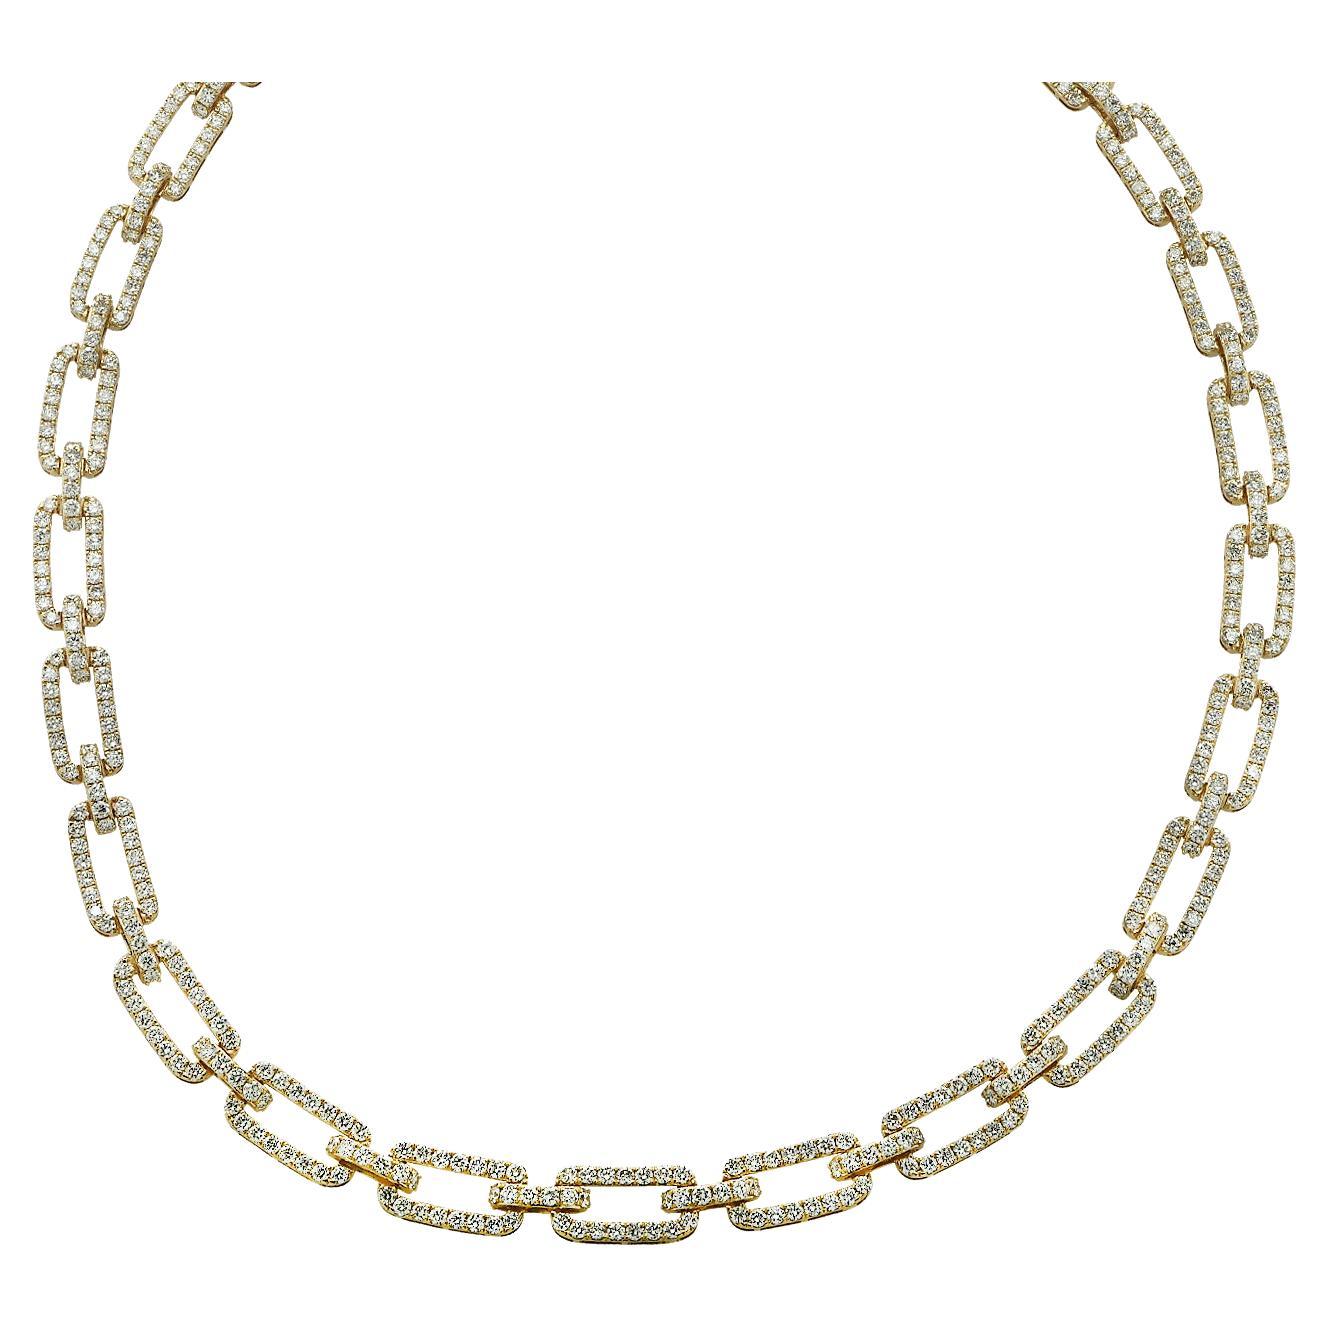 Vivid Diamonds 12.45 Carat Diamond Necklace